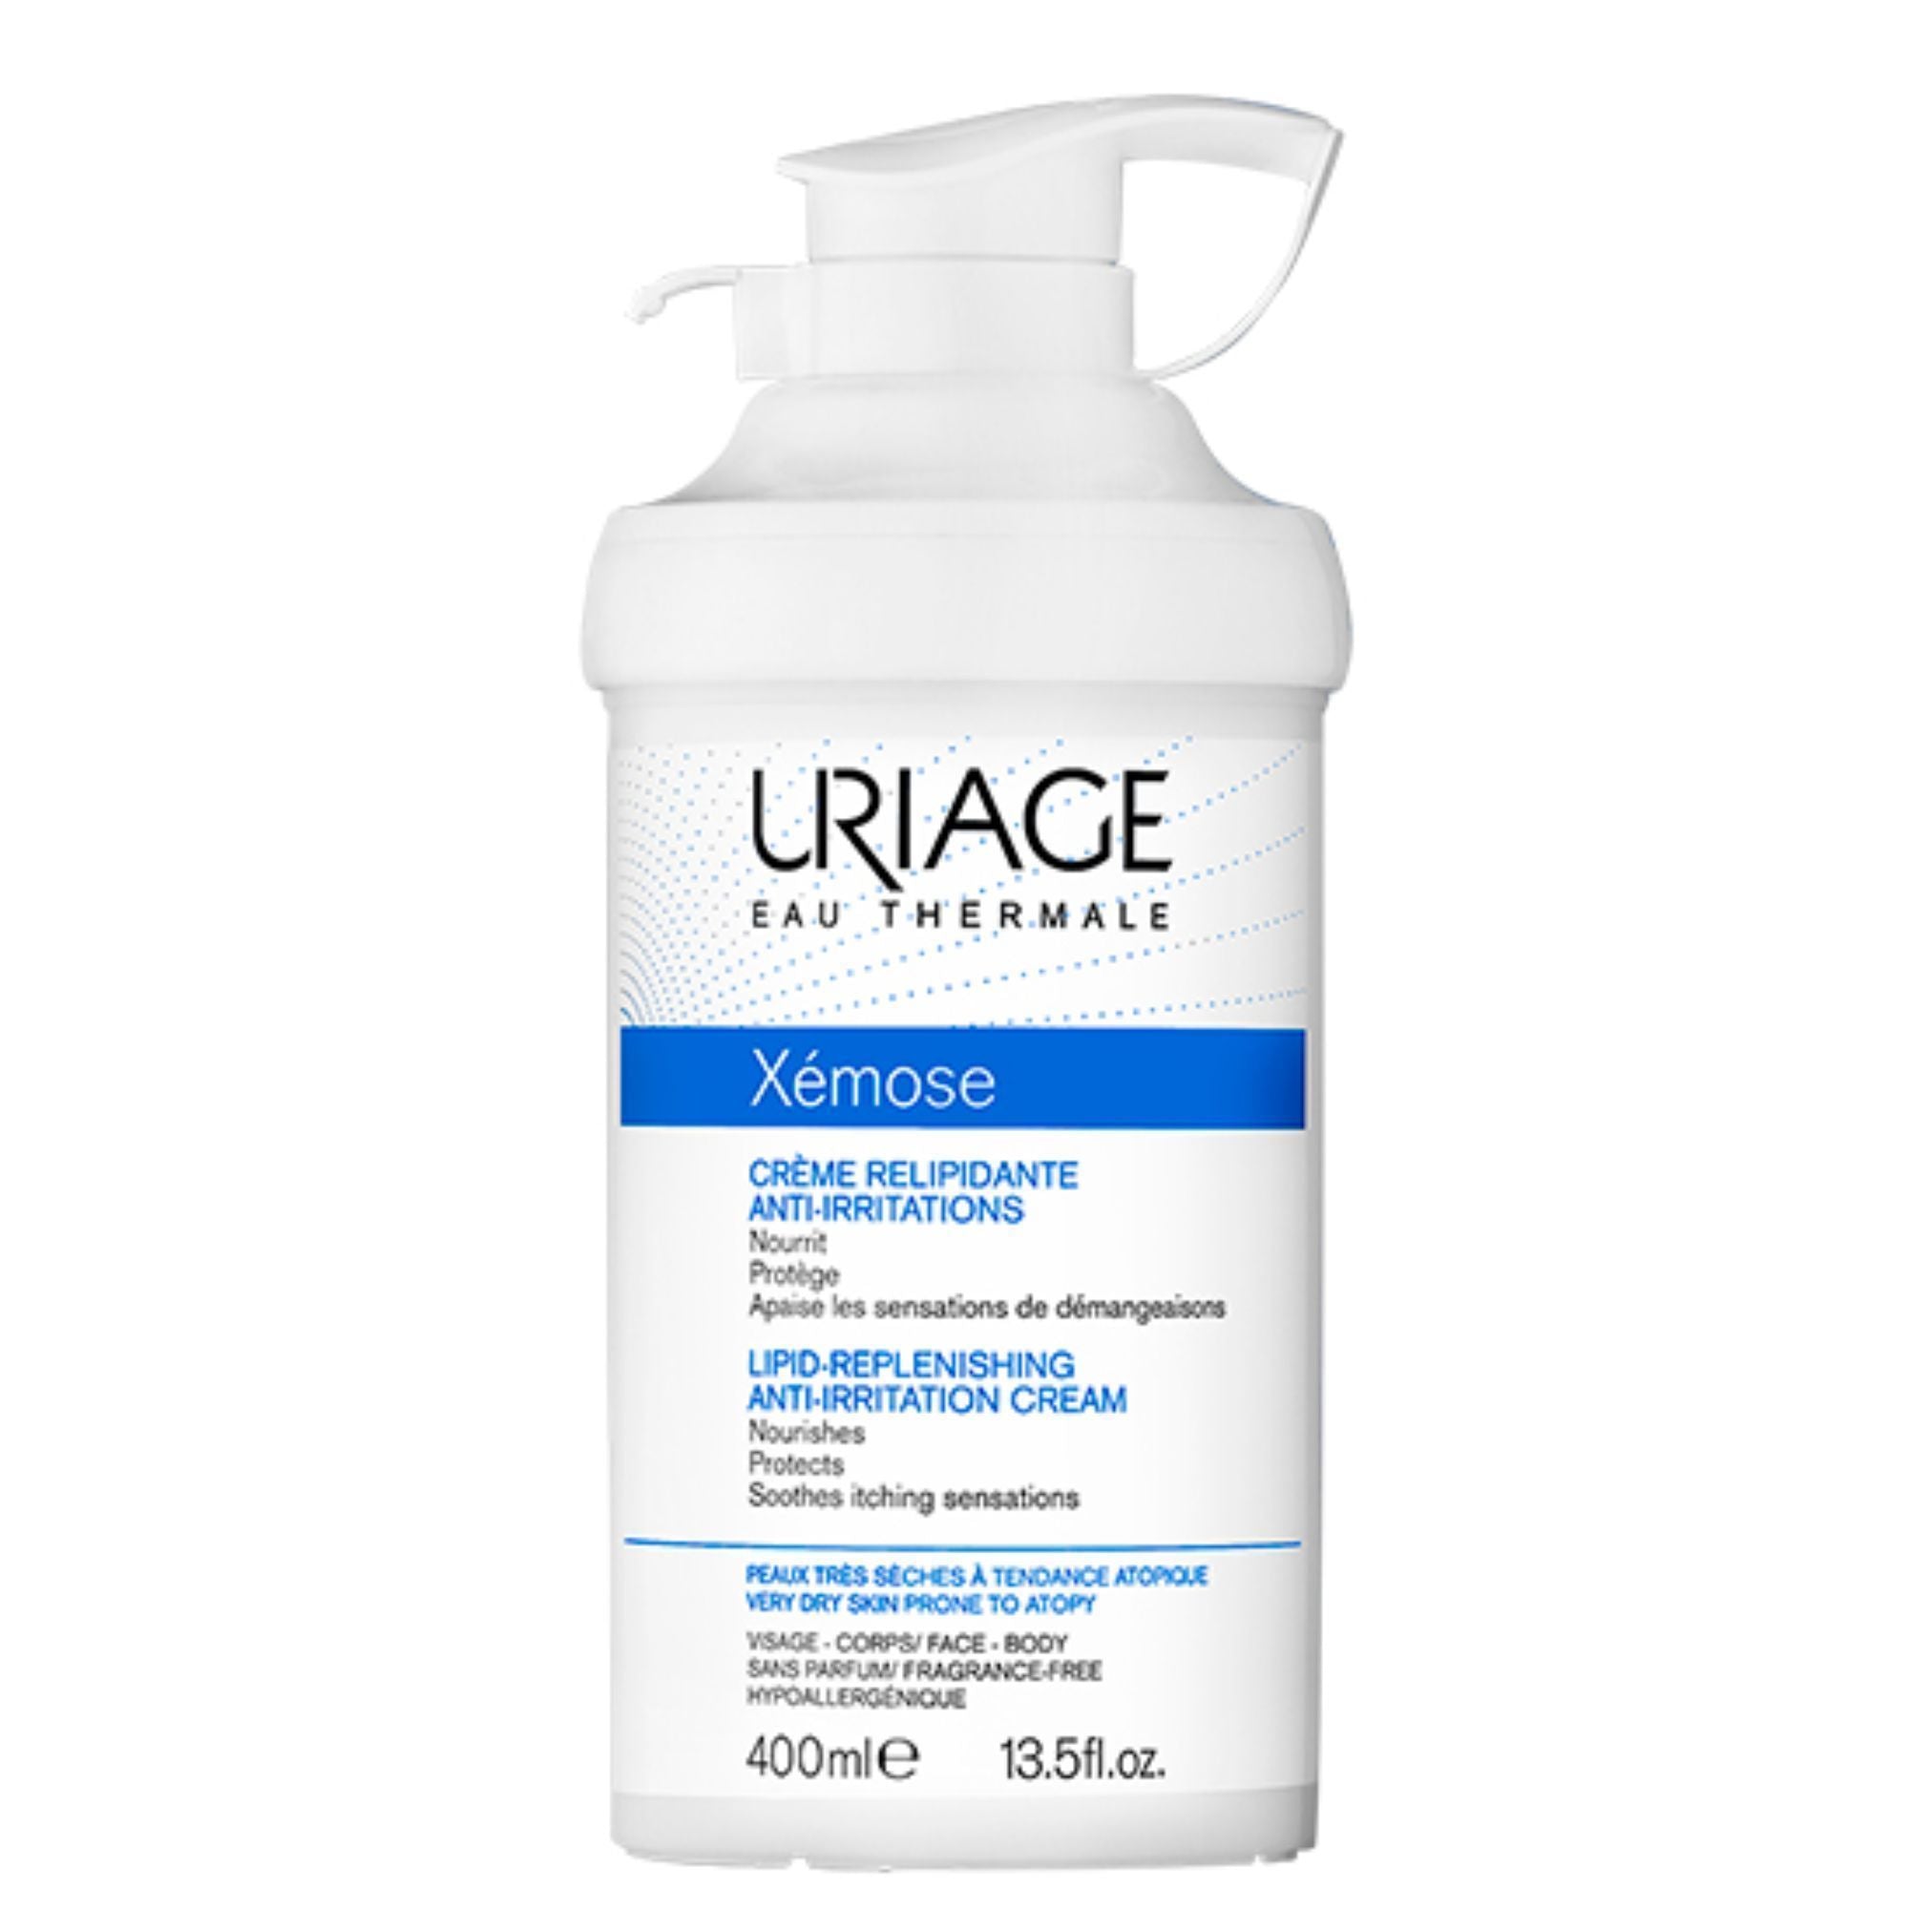 Uriage Eau Thermale Xémose Lipid-Repleneshing Anti-Irritation Cream 400ml